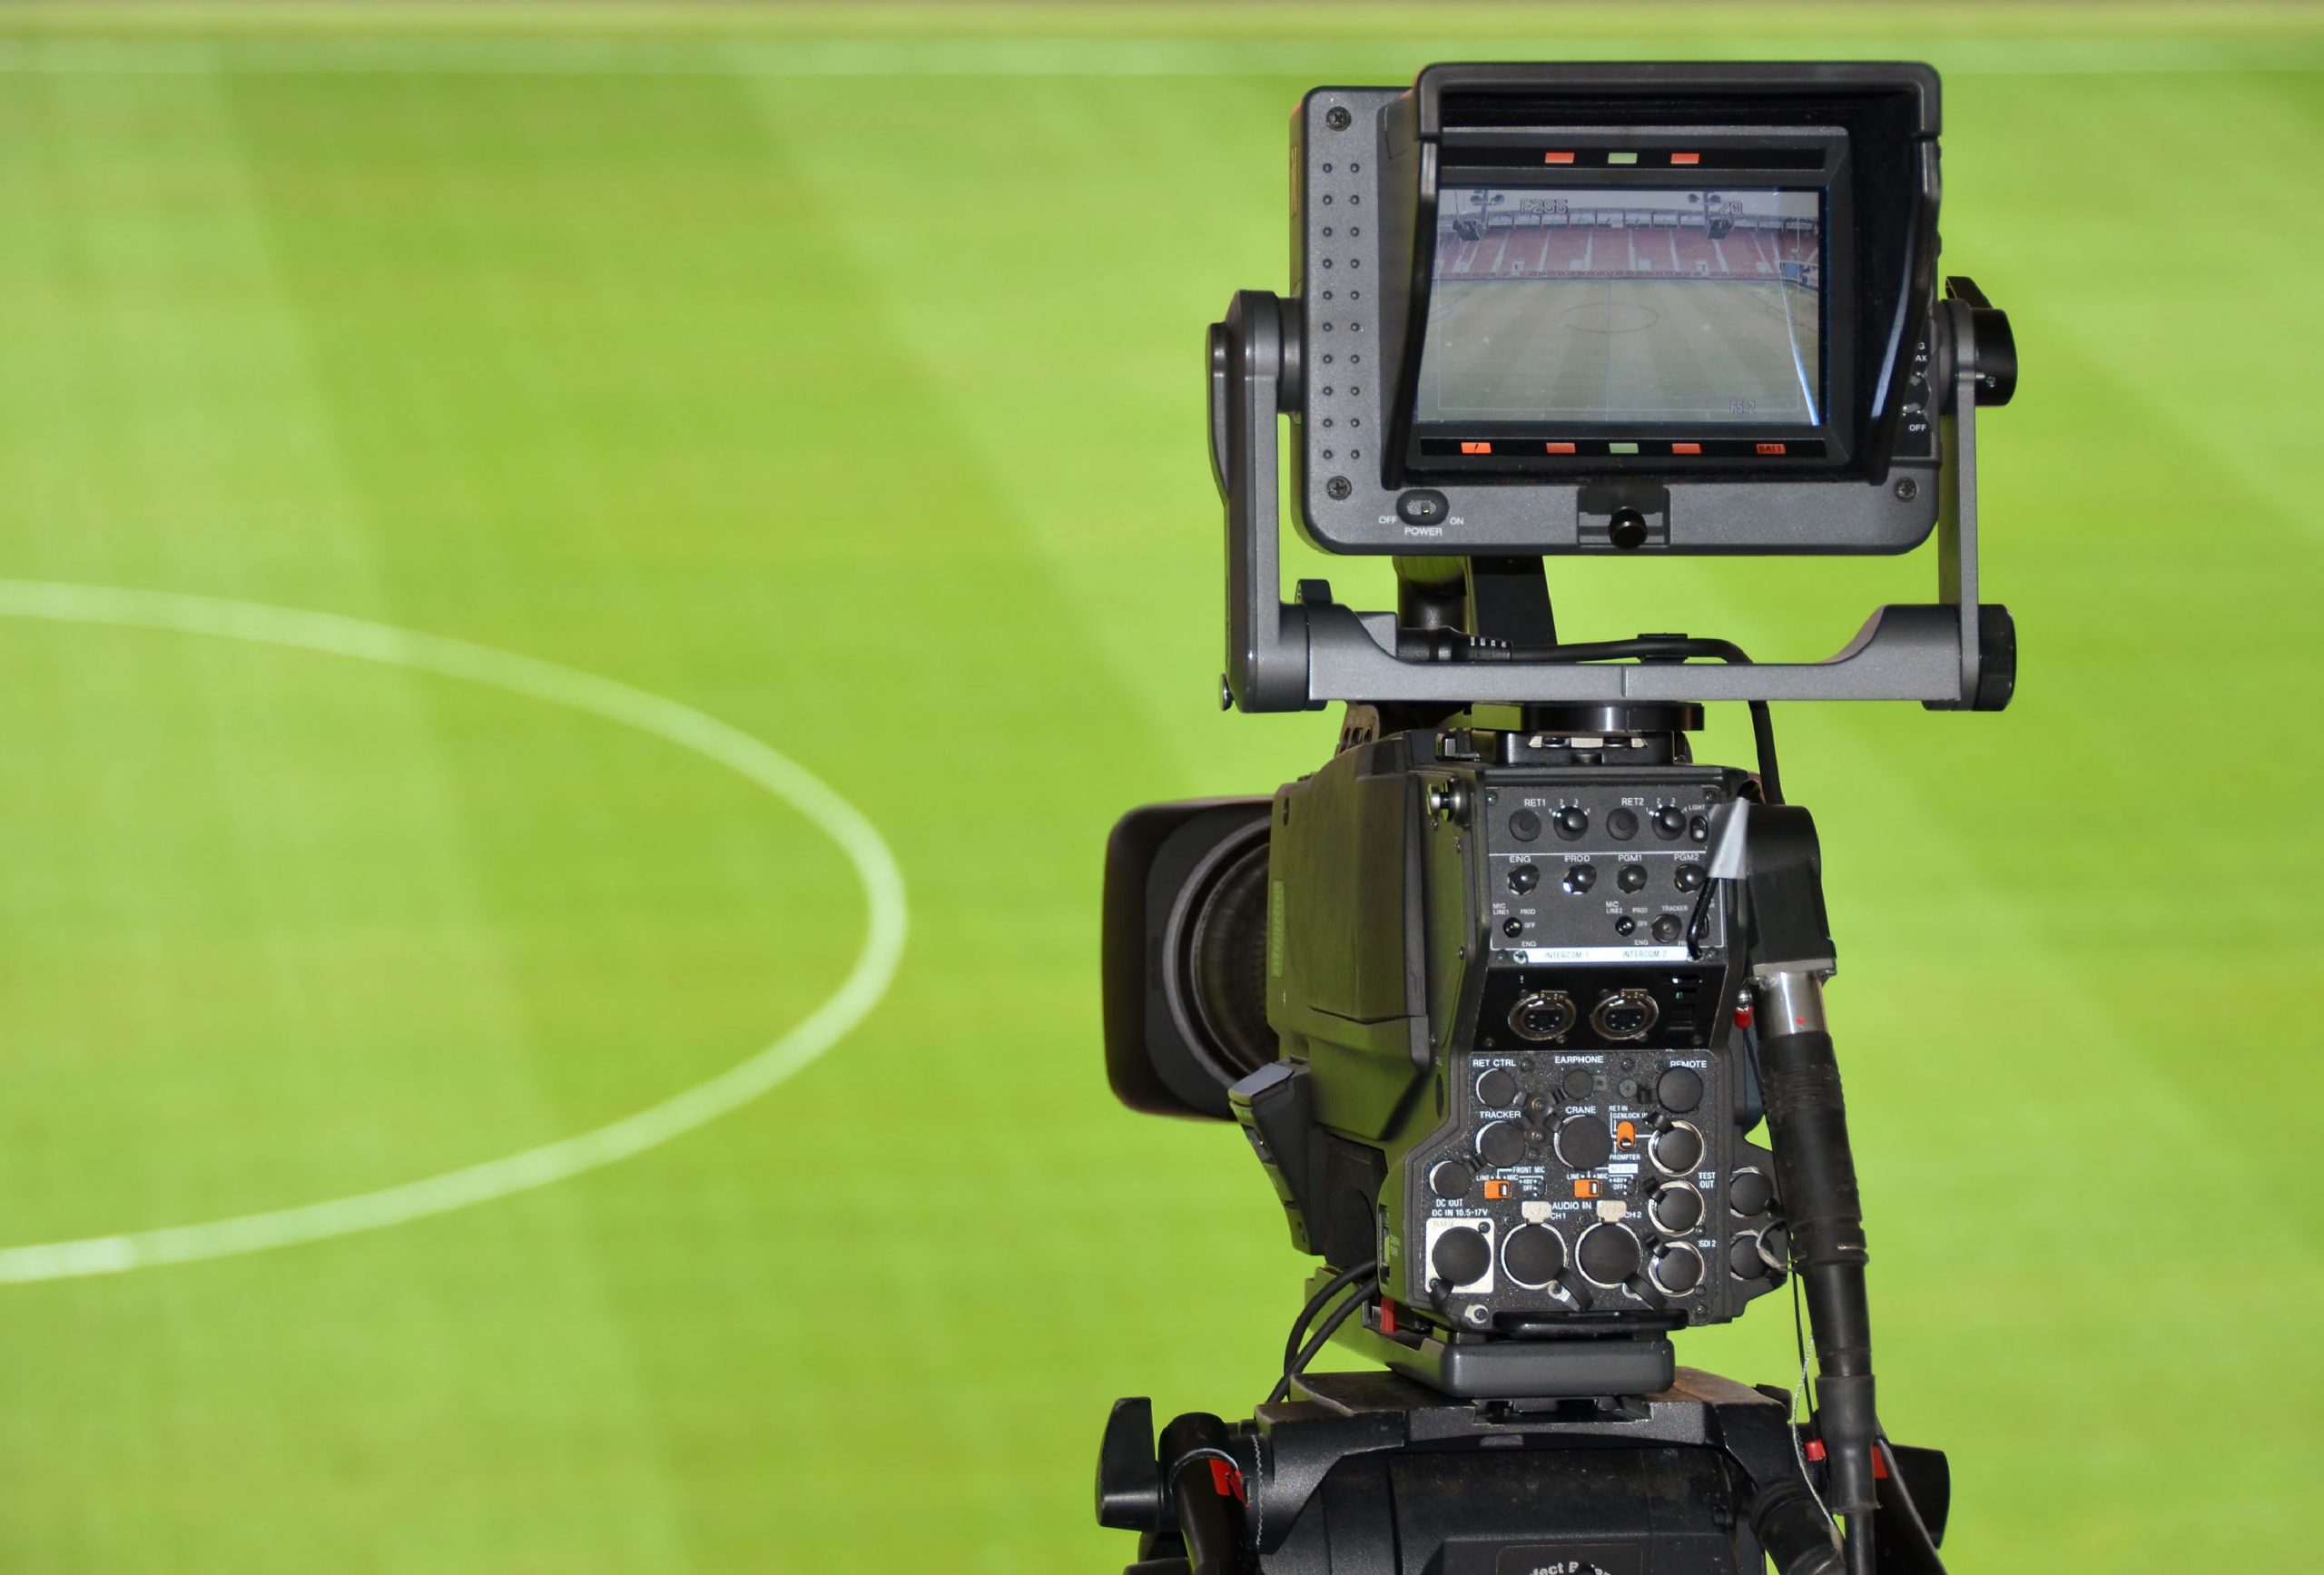 Camera deployed at a football stadium